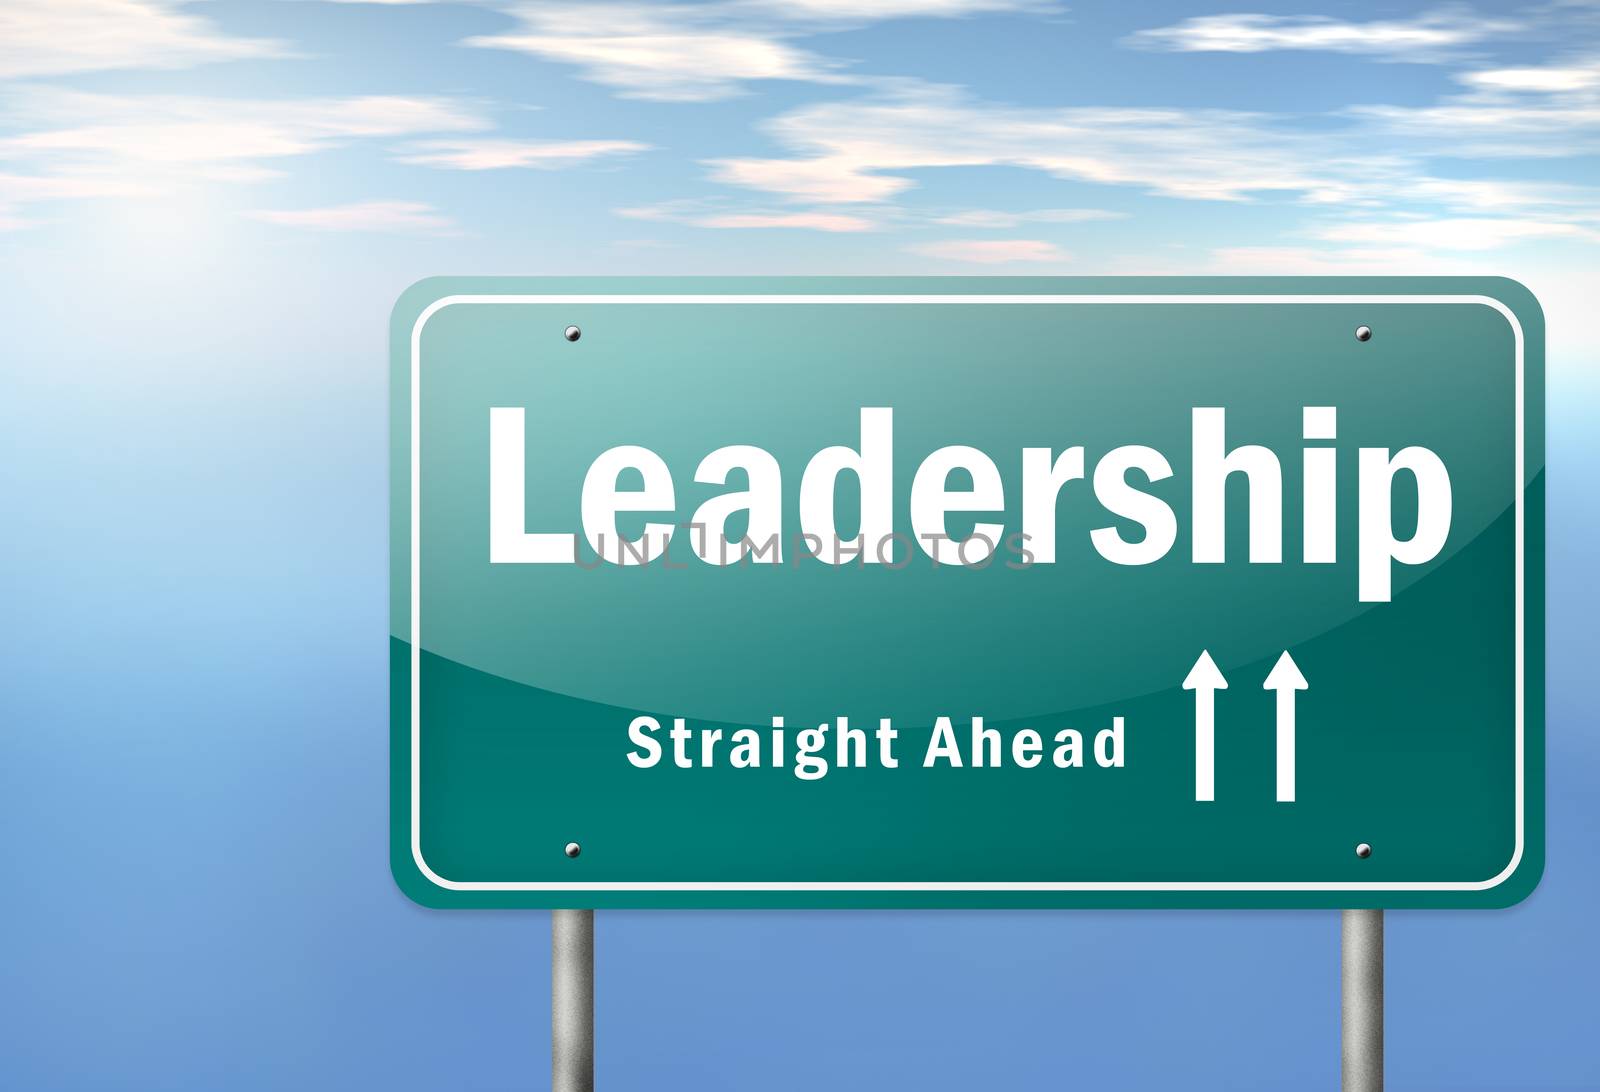 Highway Signpost with Leadership wording